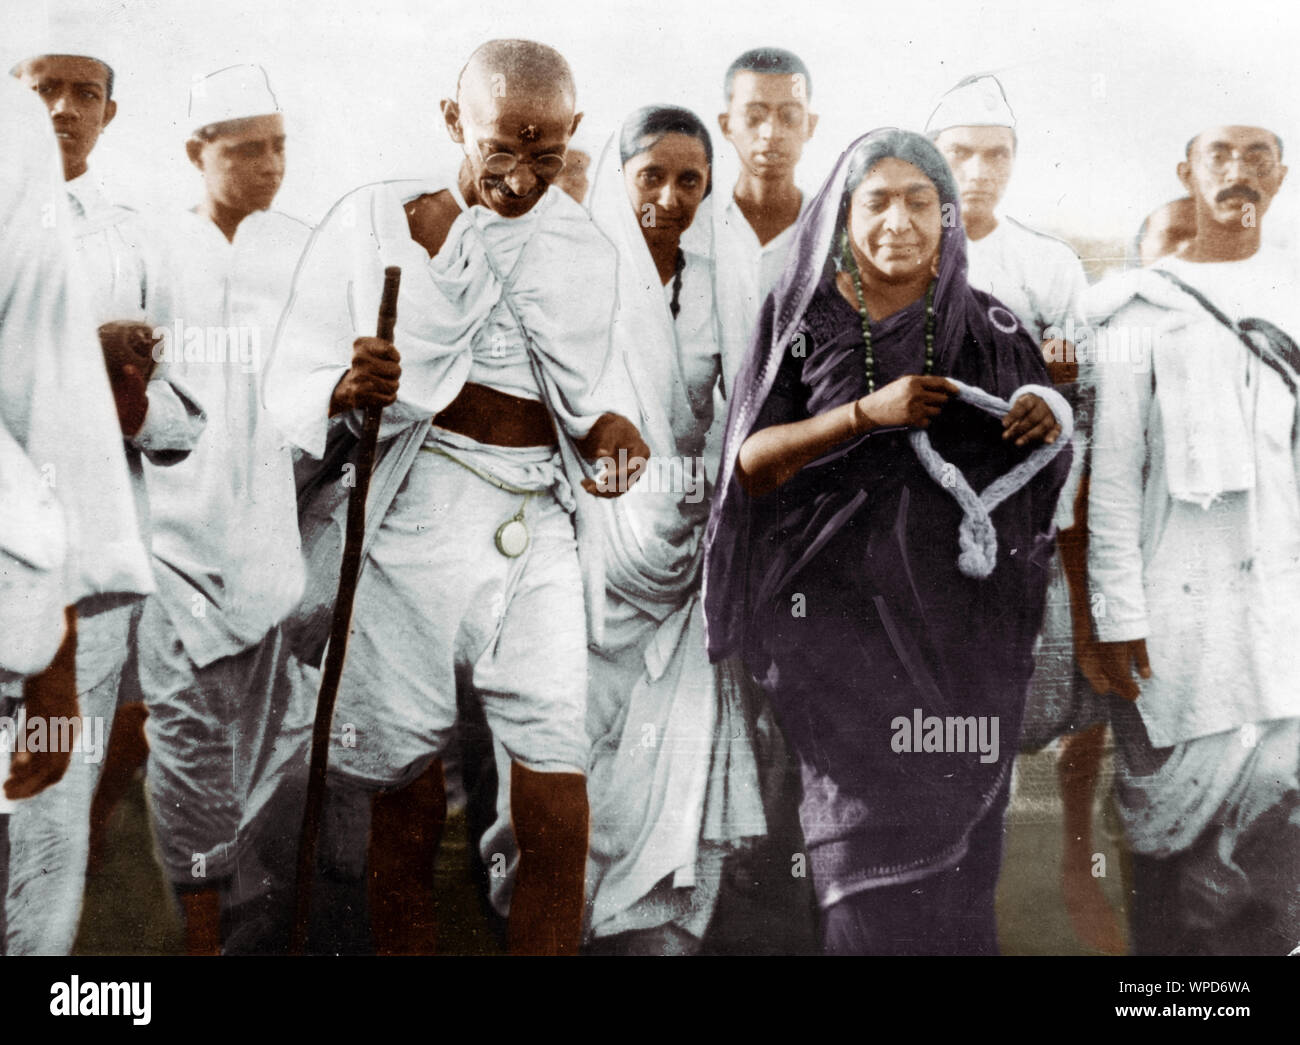 Sarojini Naidu con Mahatma Gandhi durante la sal Satyagraha, la marcha de la sal, marcha de Dandi, Dandi, Gujarat, India, Asia, 5 de abril de 1930, imagen de la antigua cosecha de 1900s Foto de stock